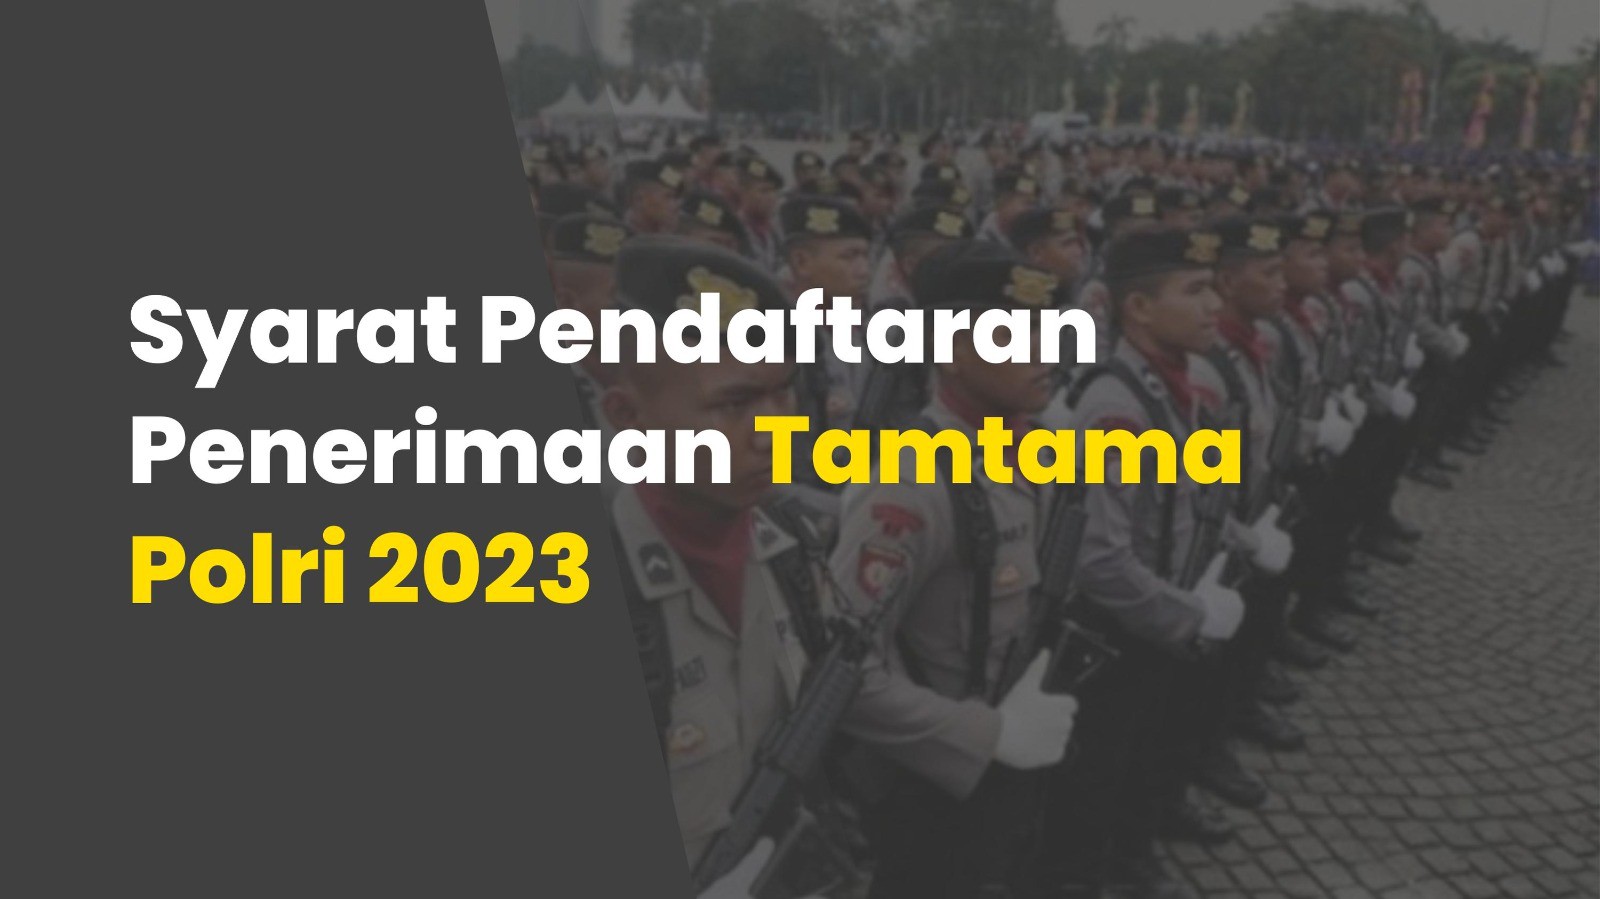 Syarat Pendaftaran Penerimaan Tamtama Polri 2023